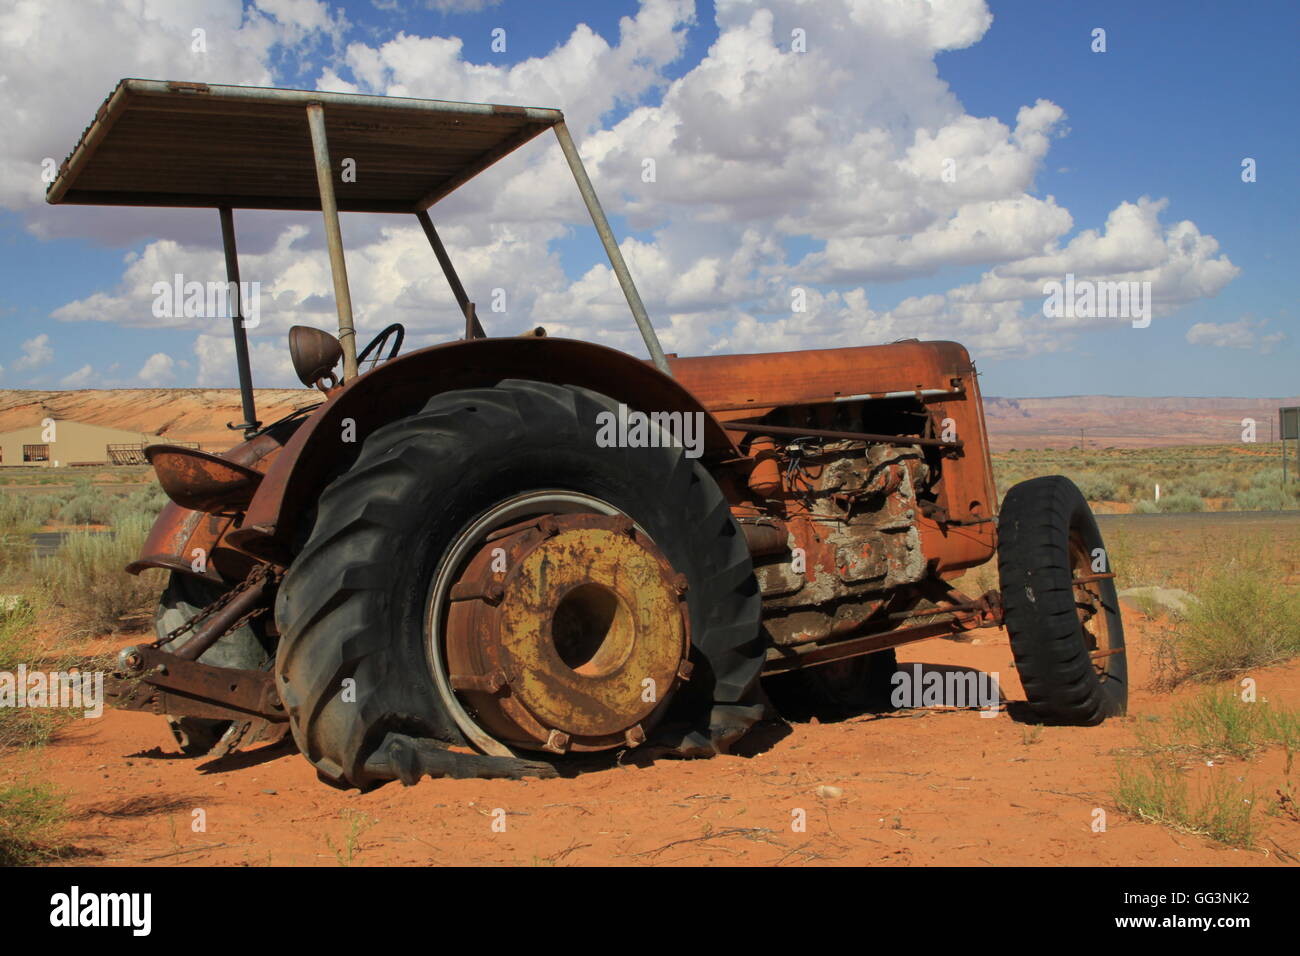 Abandoned farm tractor in desert Stock Photo